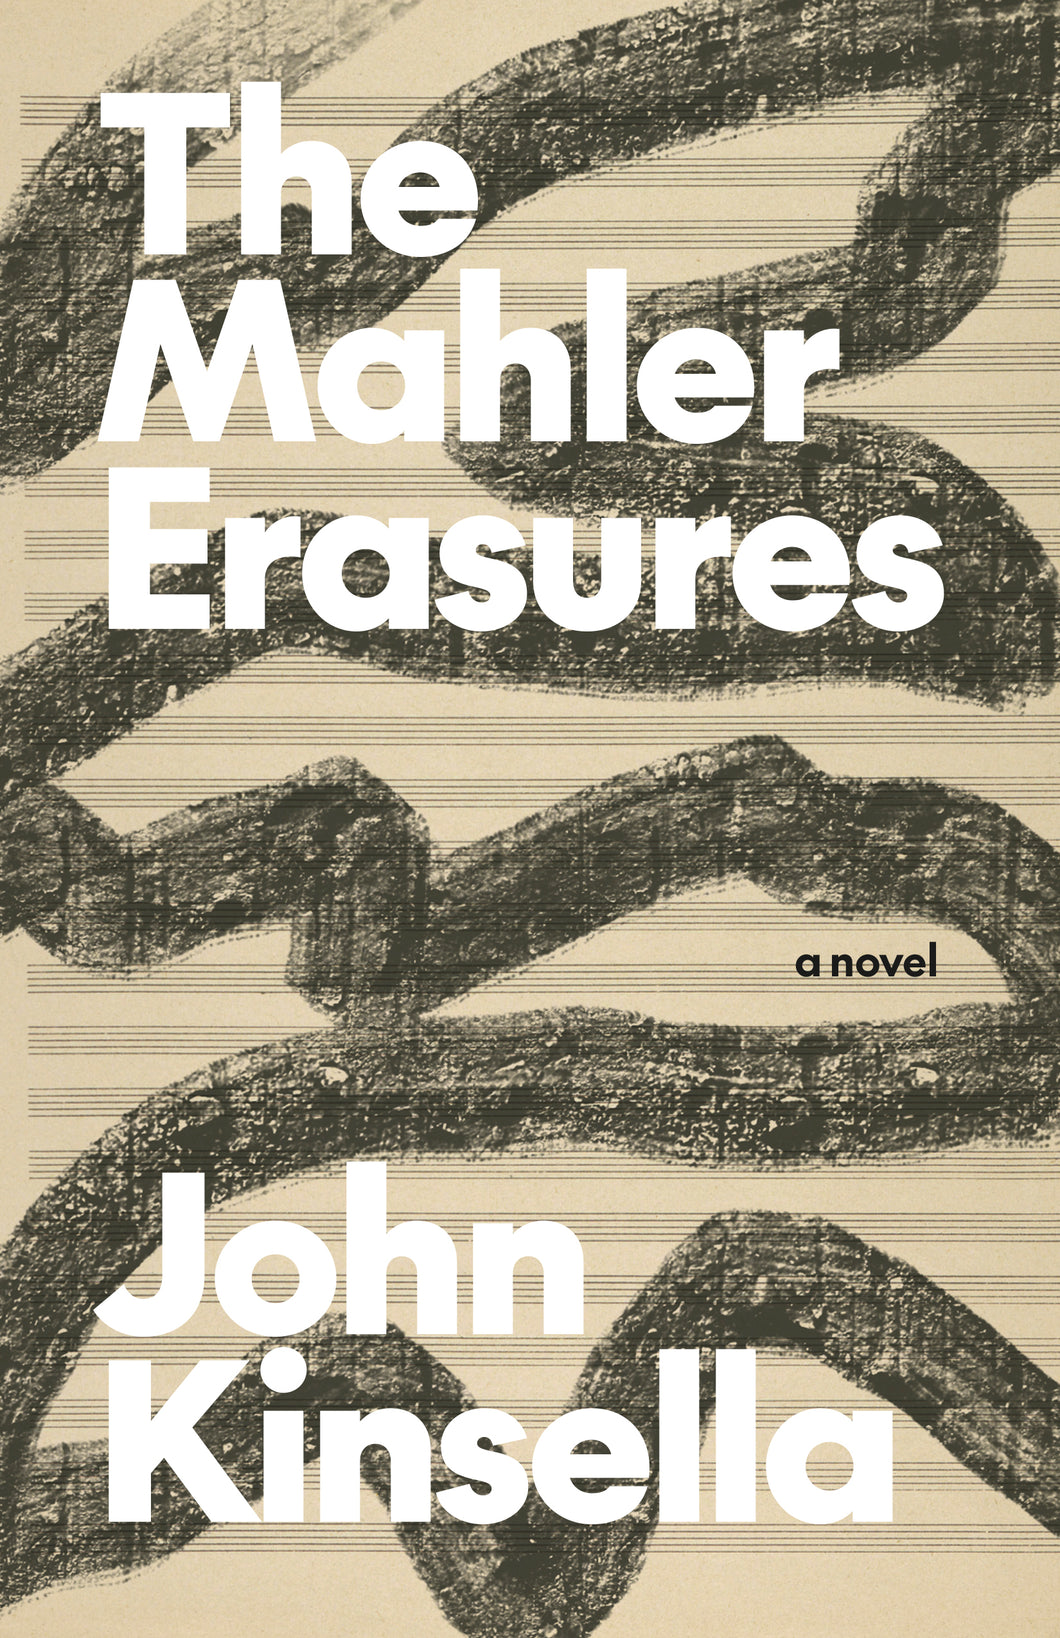 Mahler Erasures